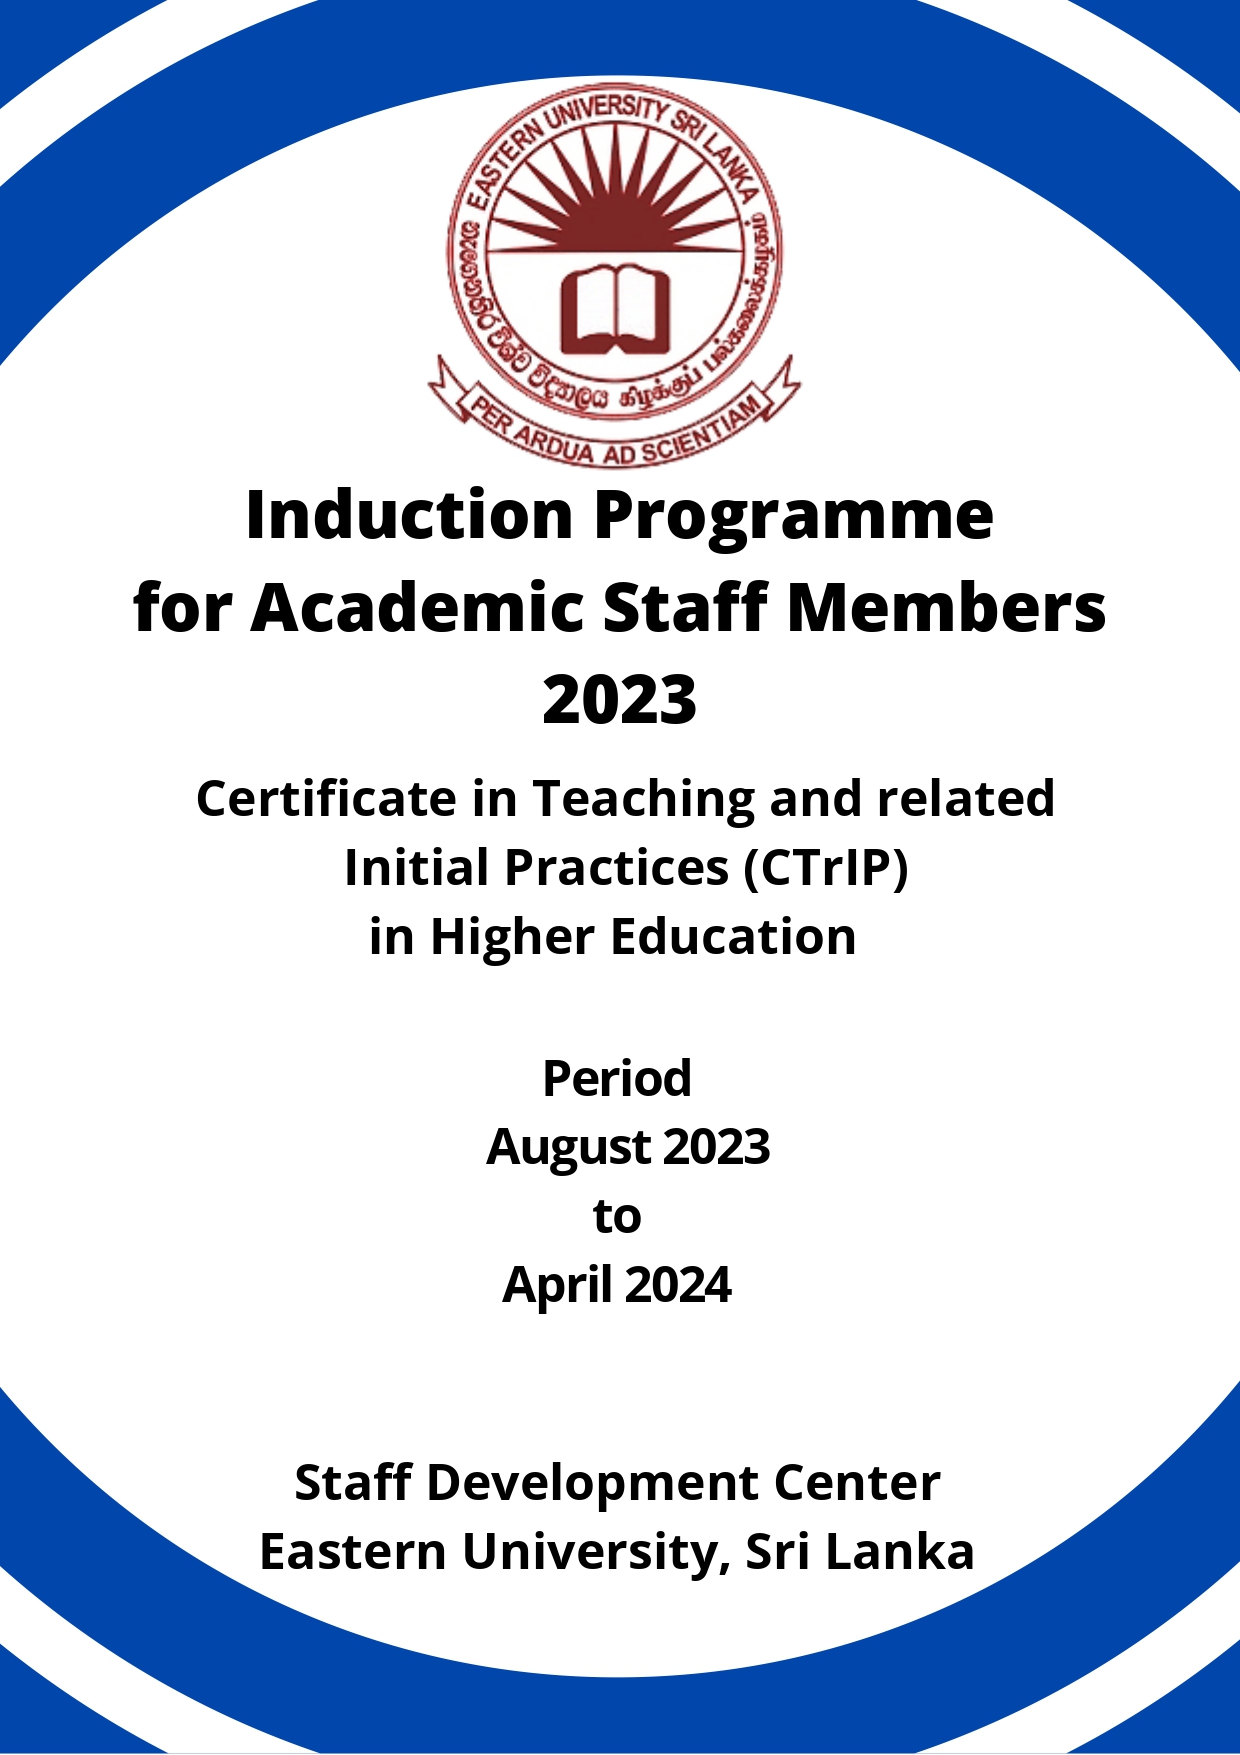 induction Programme 2023 leaflet_page-0001.jpg